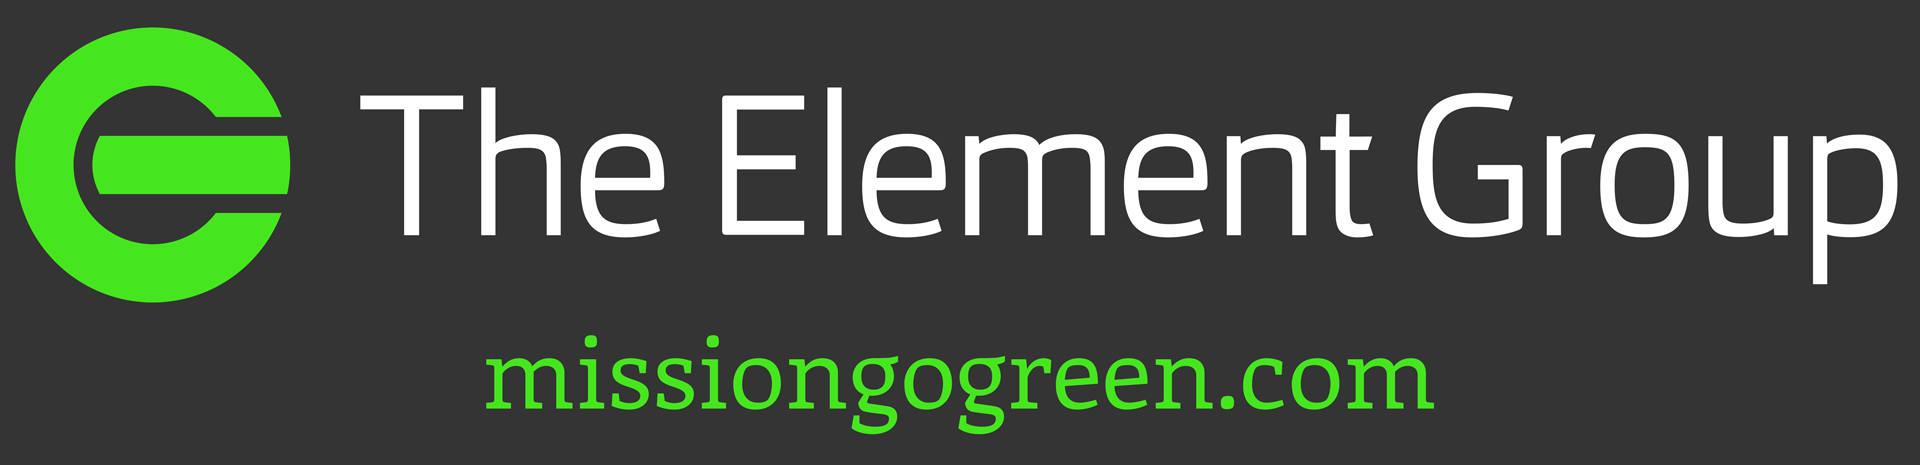 M2X Energy dba The Element Group company logo